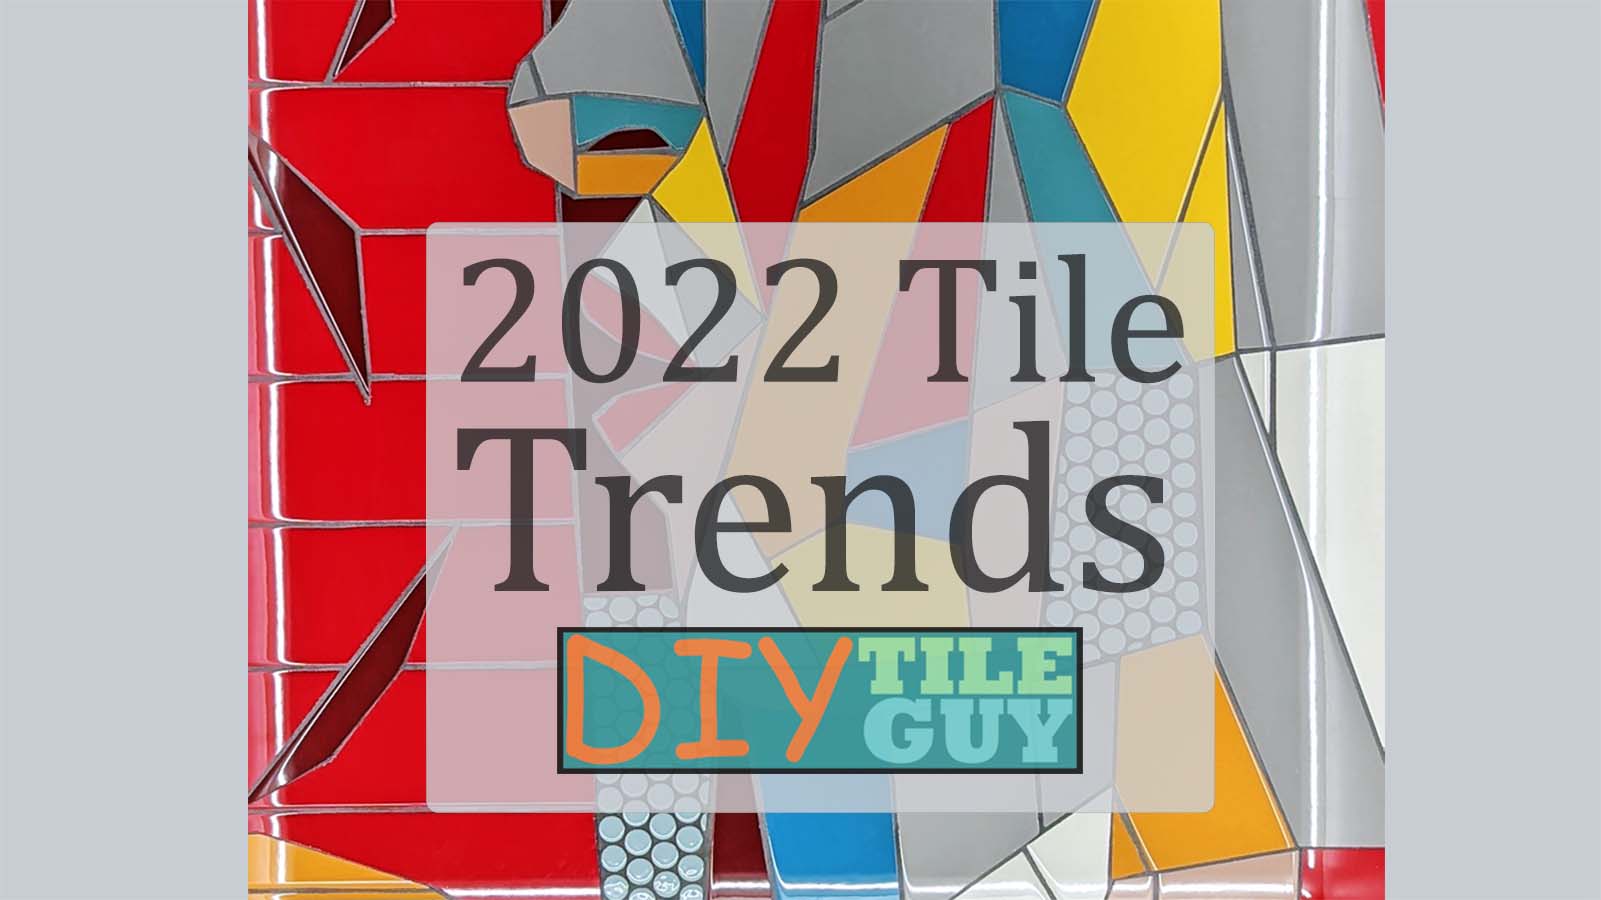 2022 Tile Trends and Design Ideas DIYTileGuy